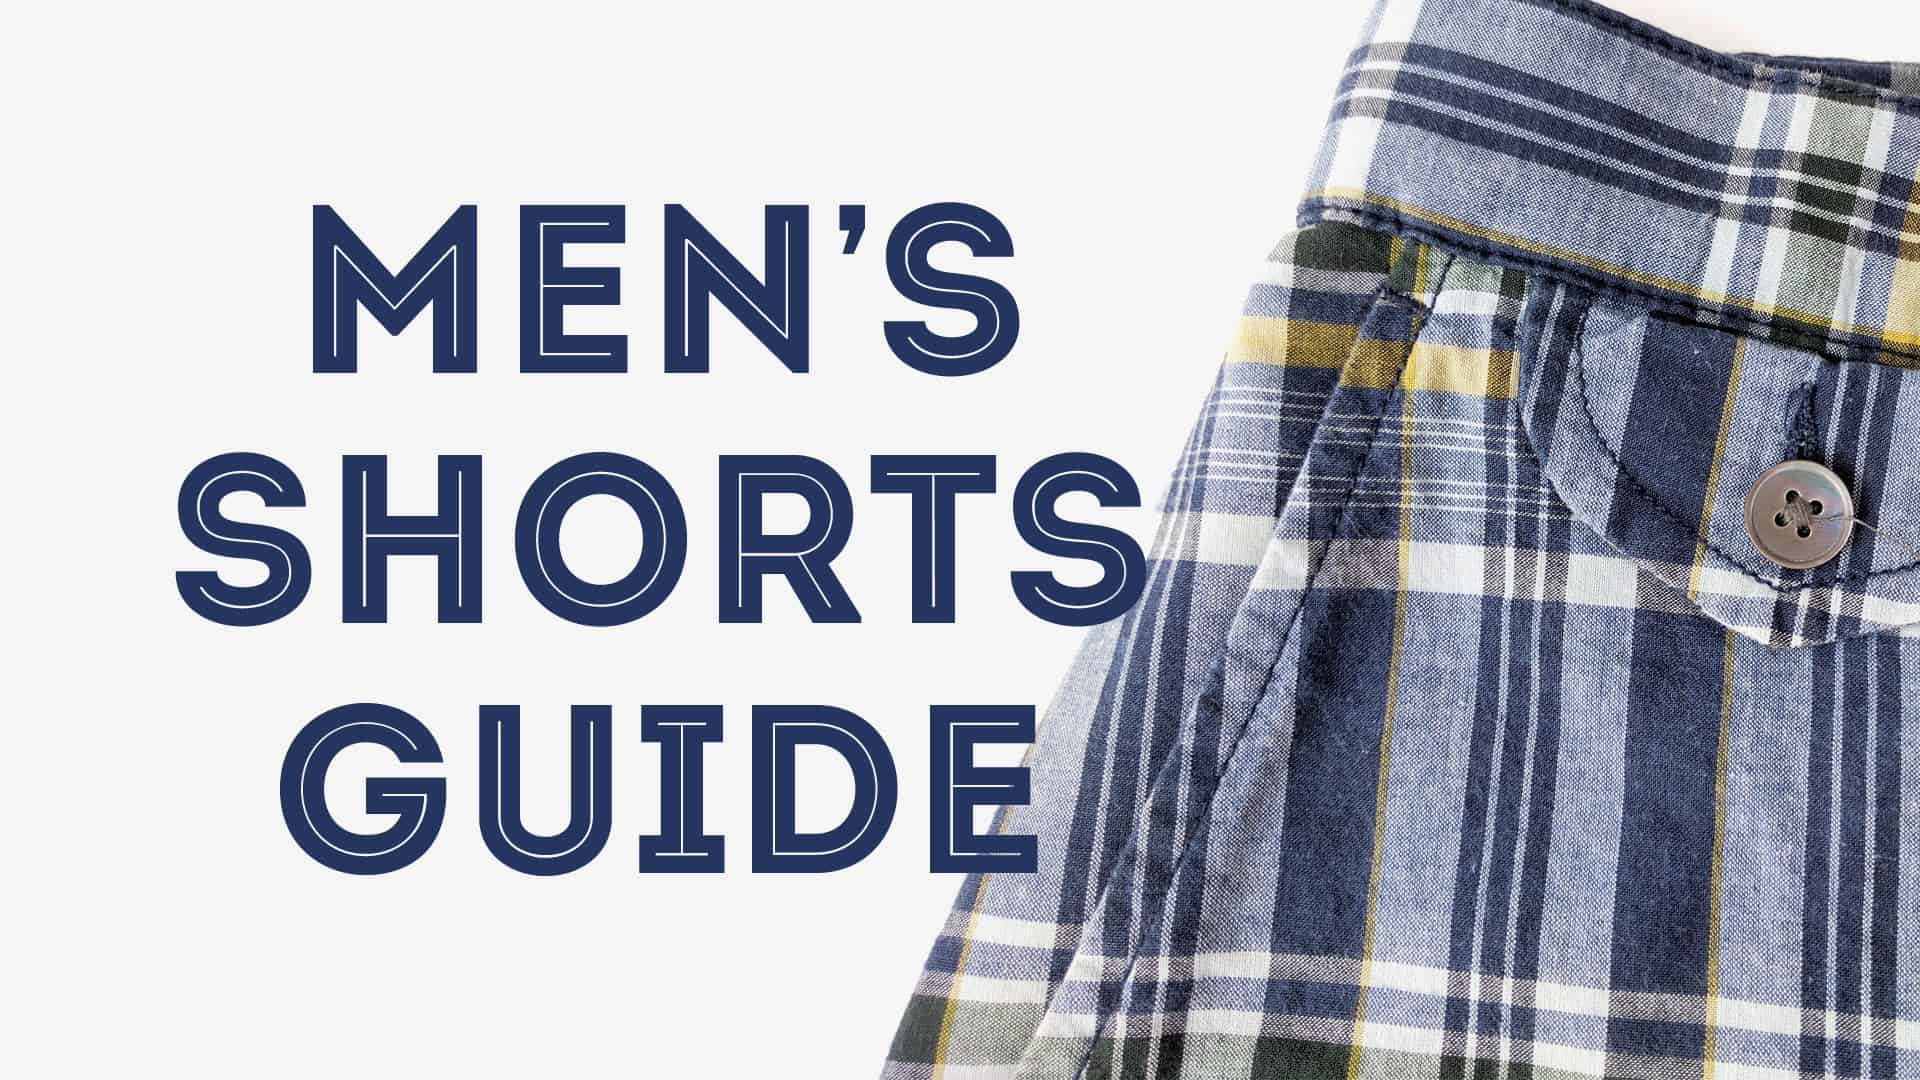 Men's Shorts Guide For Summer